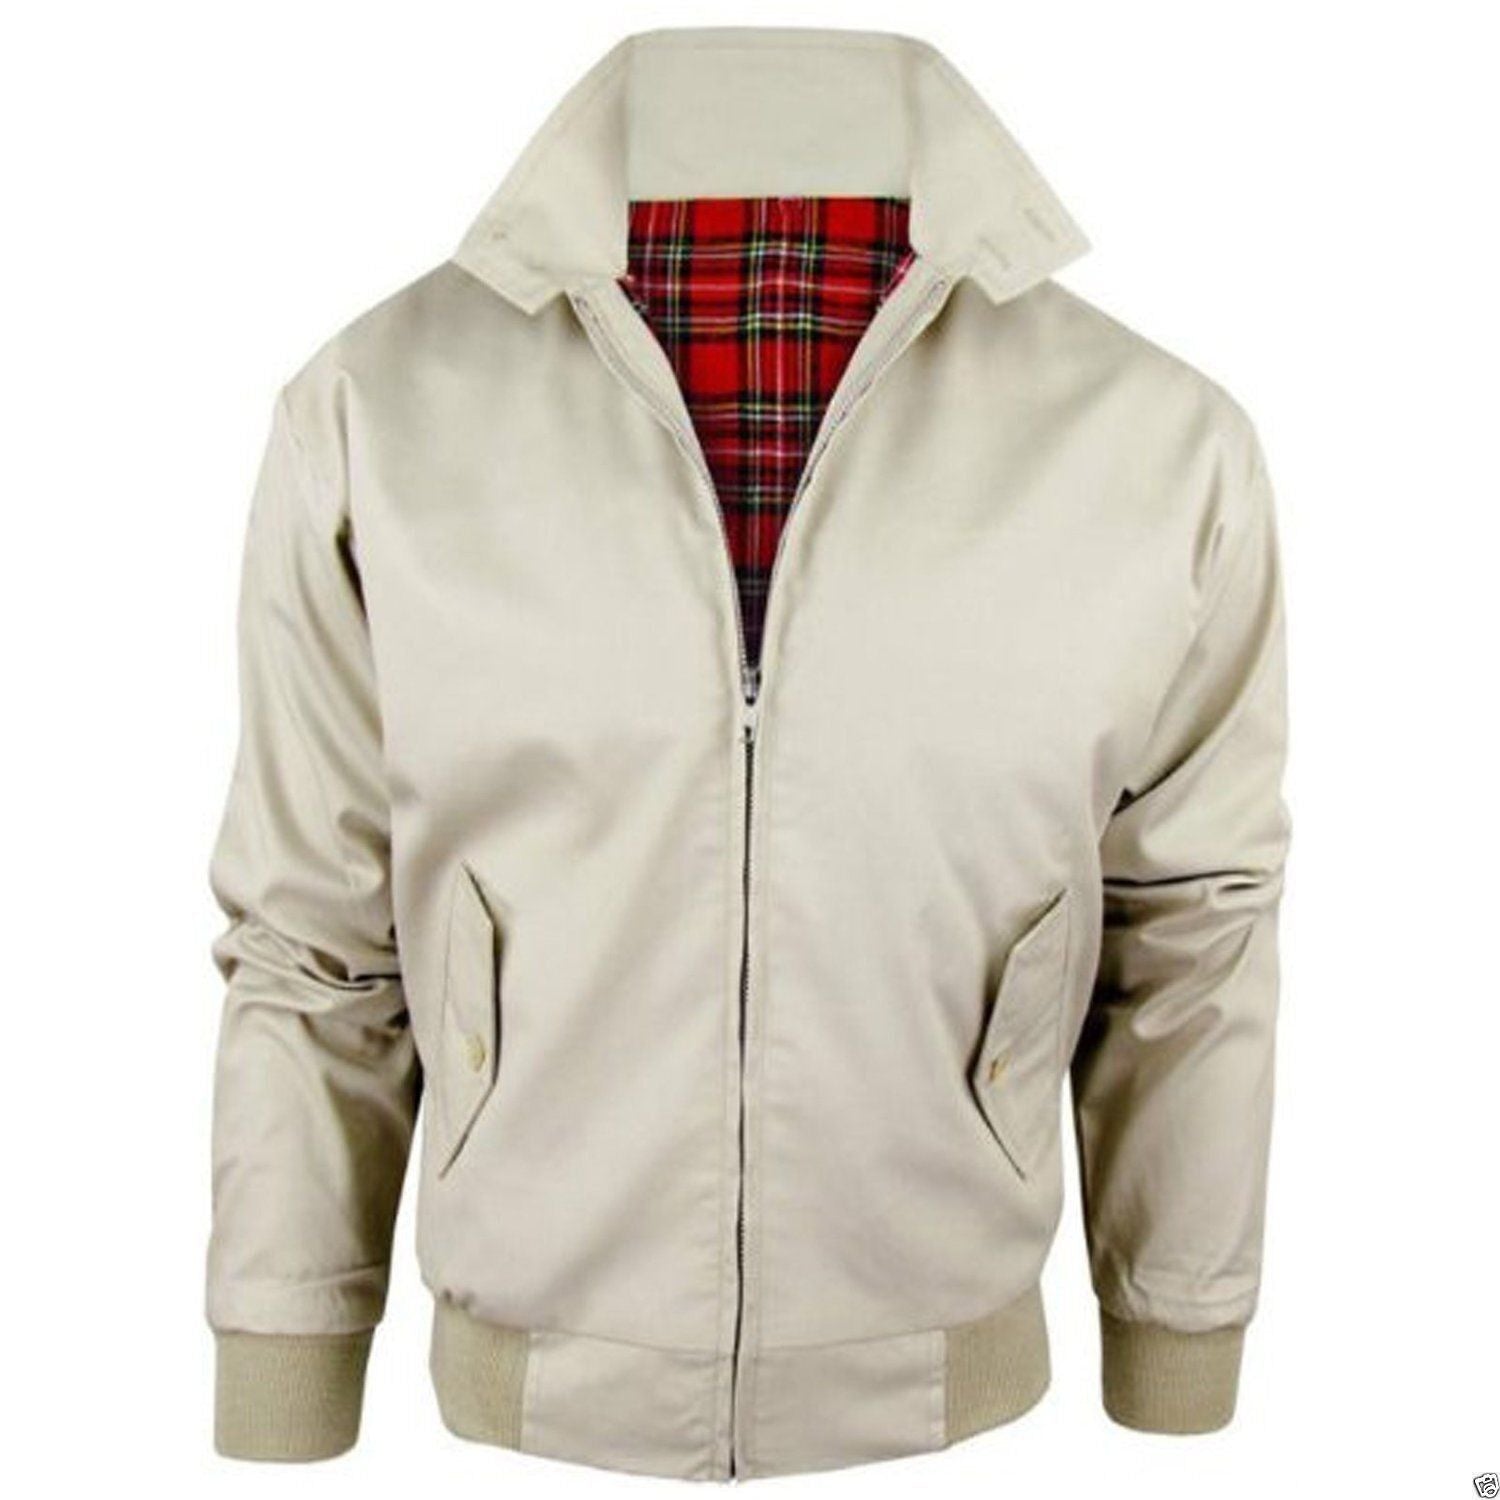 Men's Harrington Vintage Inspired Stone Jacket.